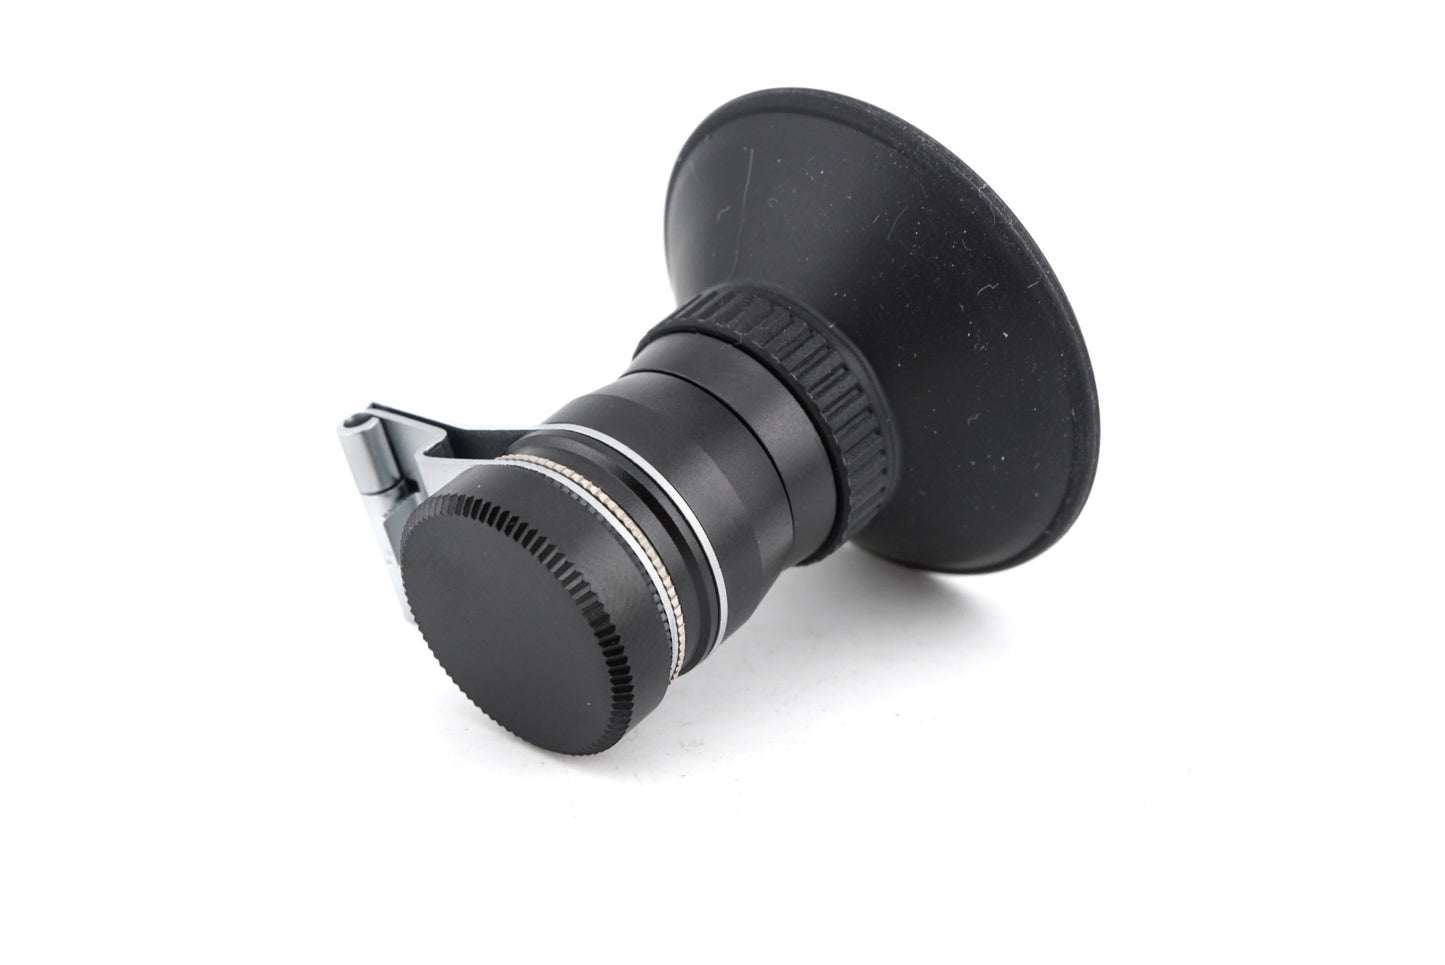 Nikon DG-2 Eyepiece Magnifier